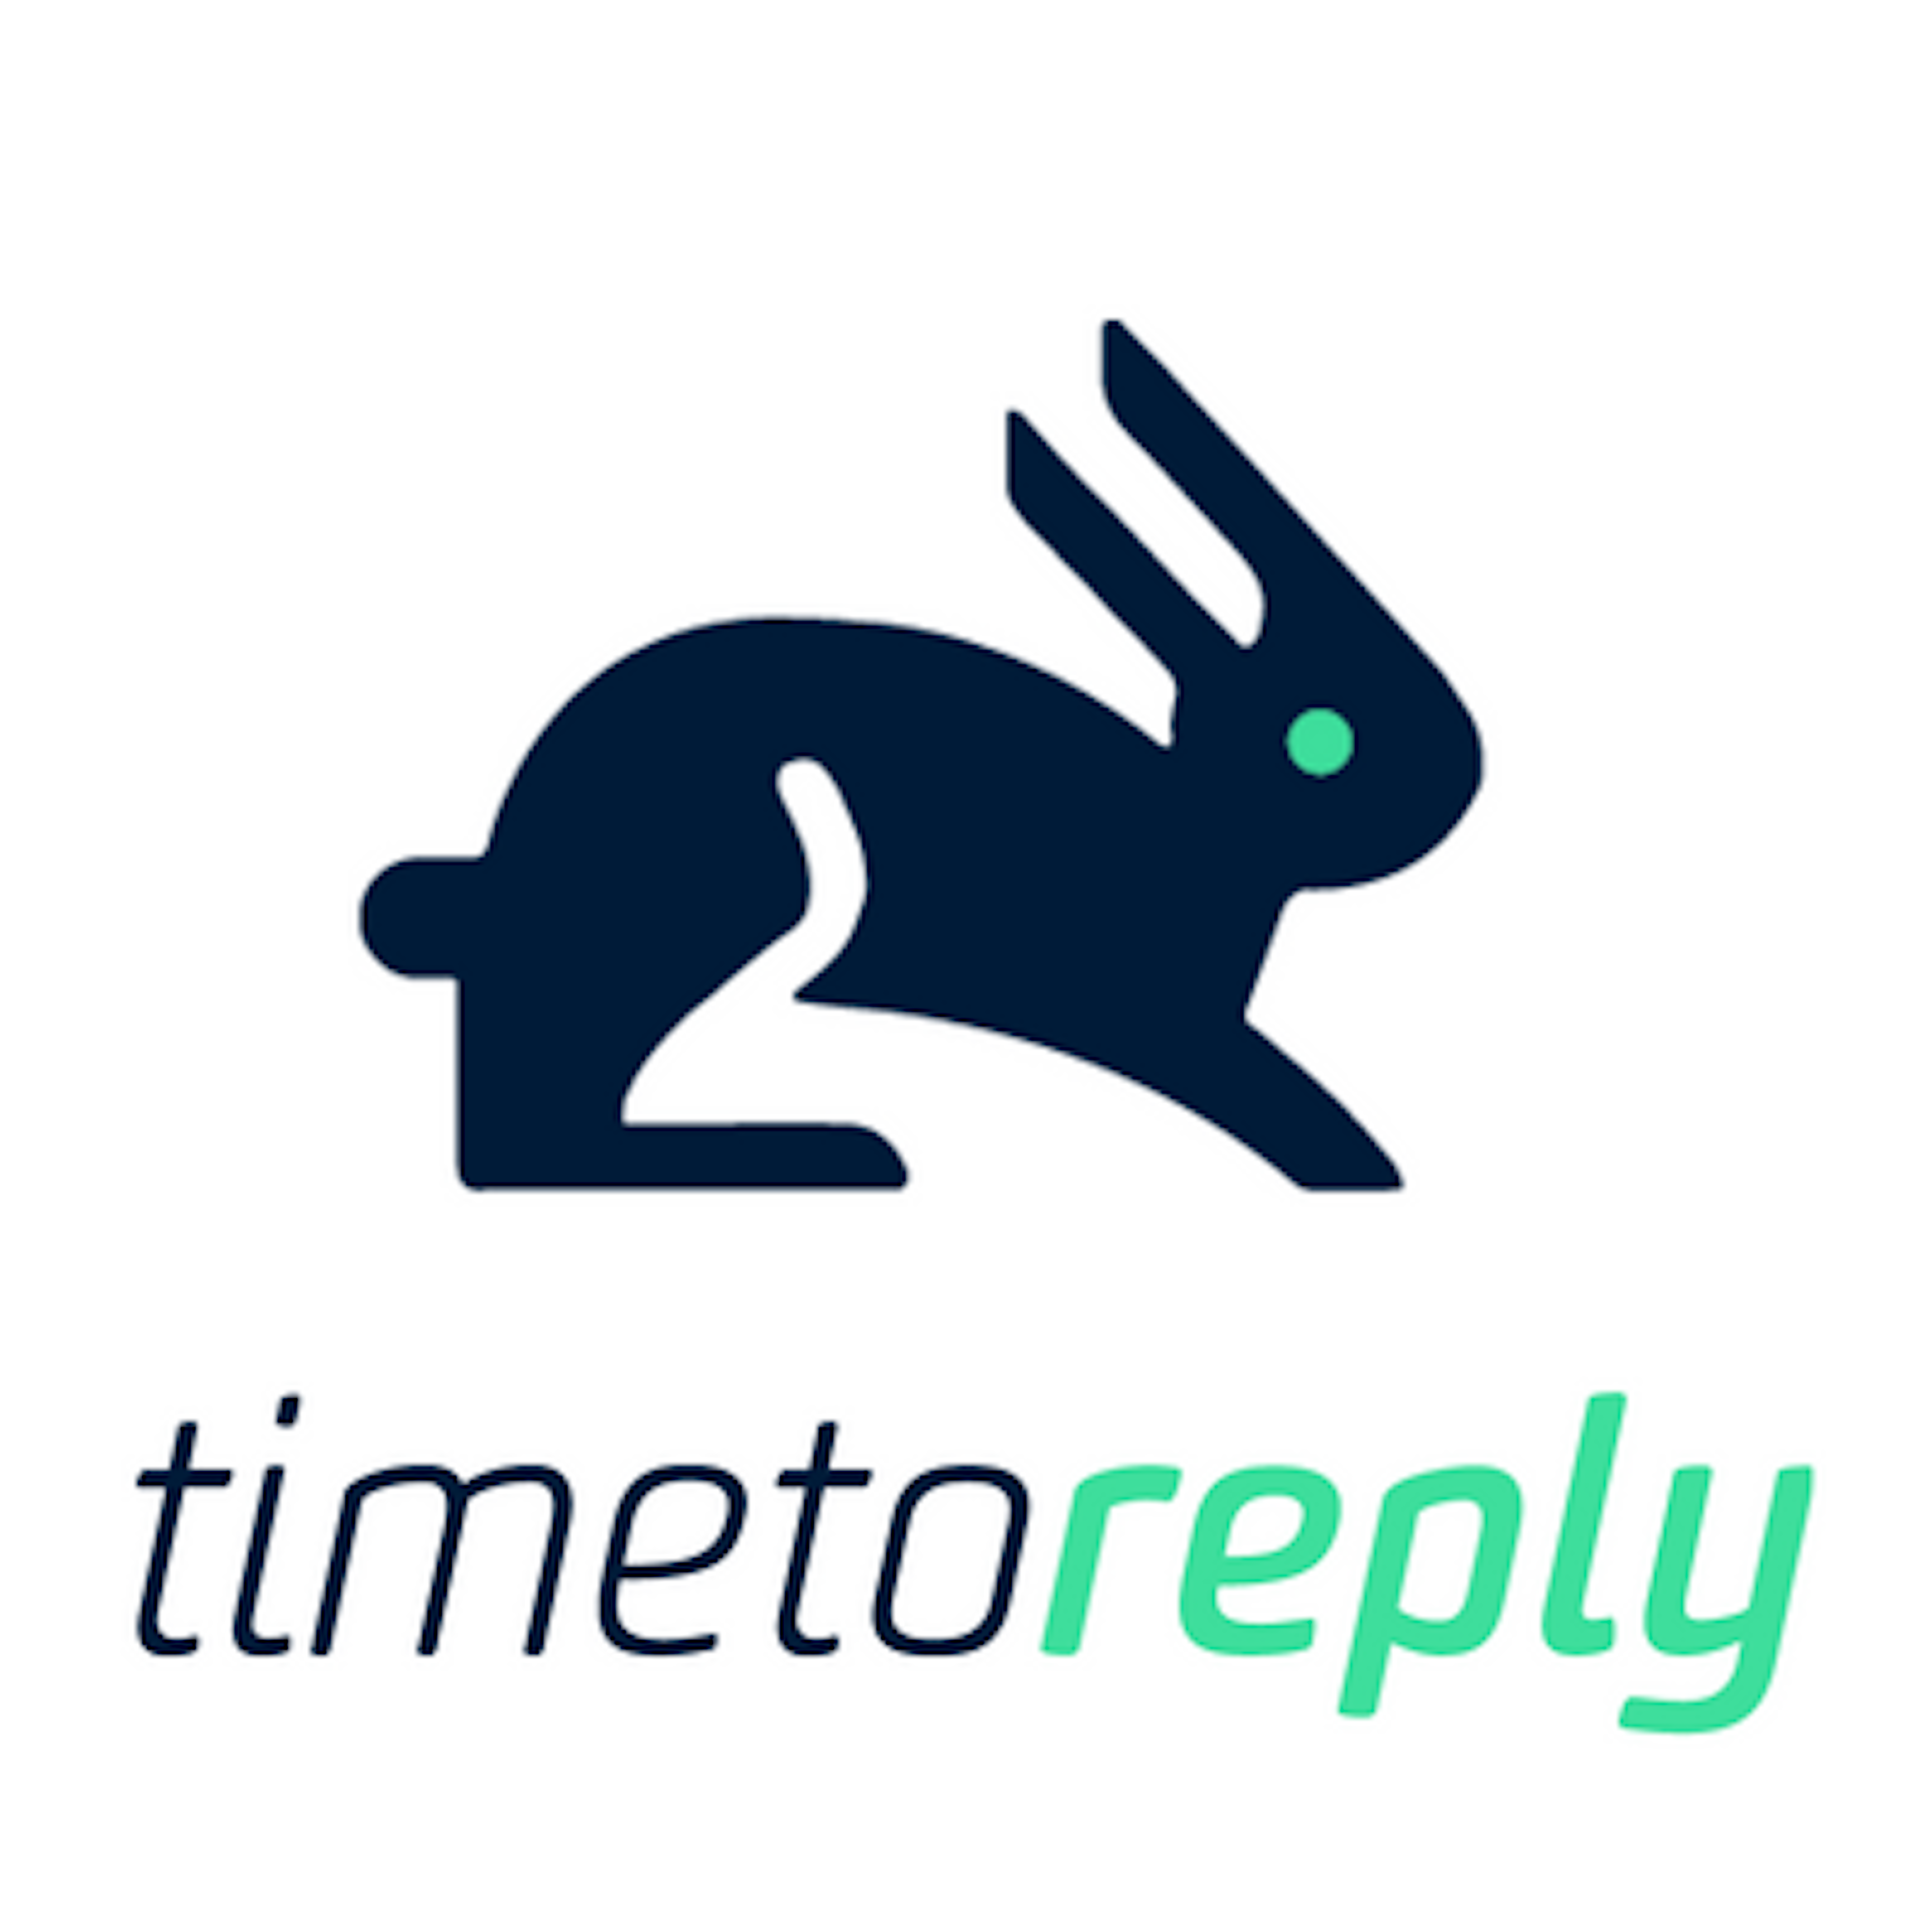 timetoreply Logo